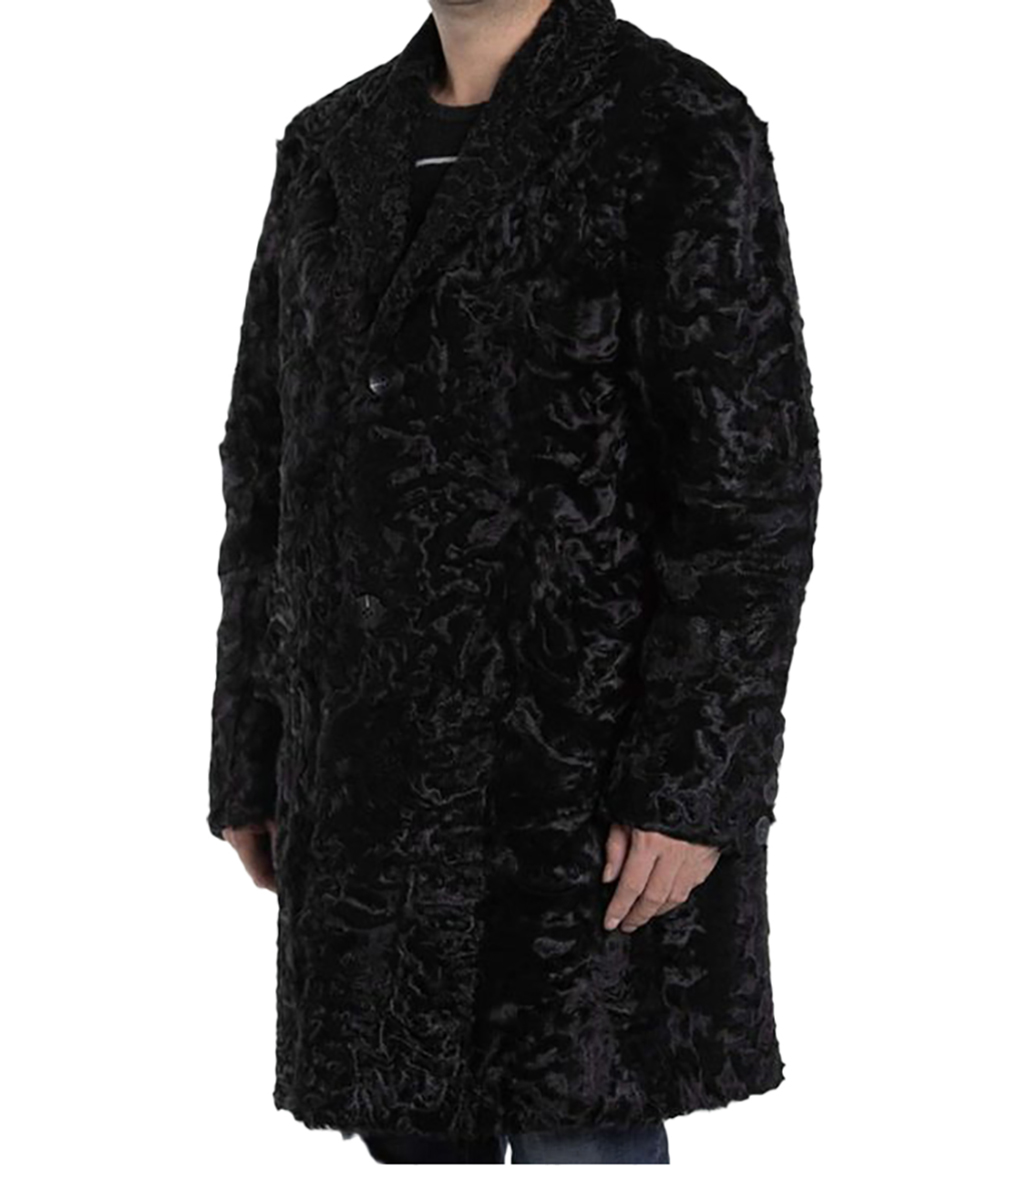 Men's Stylish Mid-Length Black Persian Lamb Fur Coat